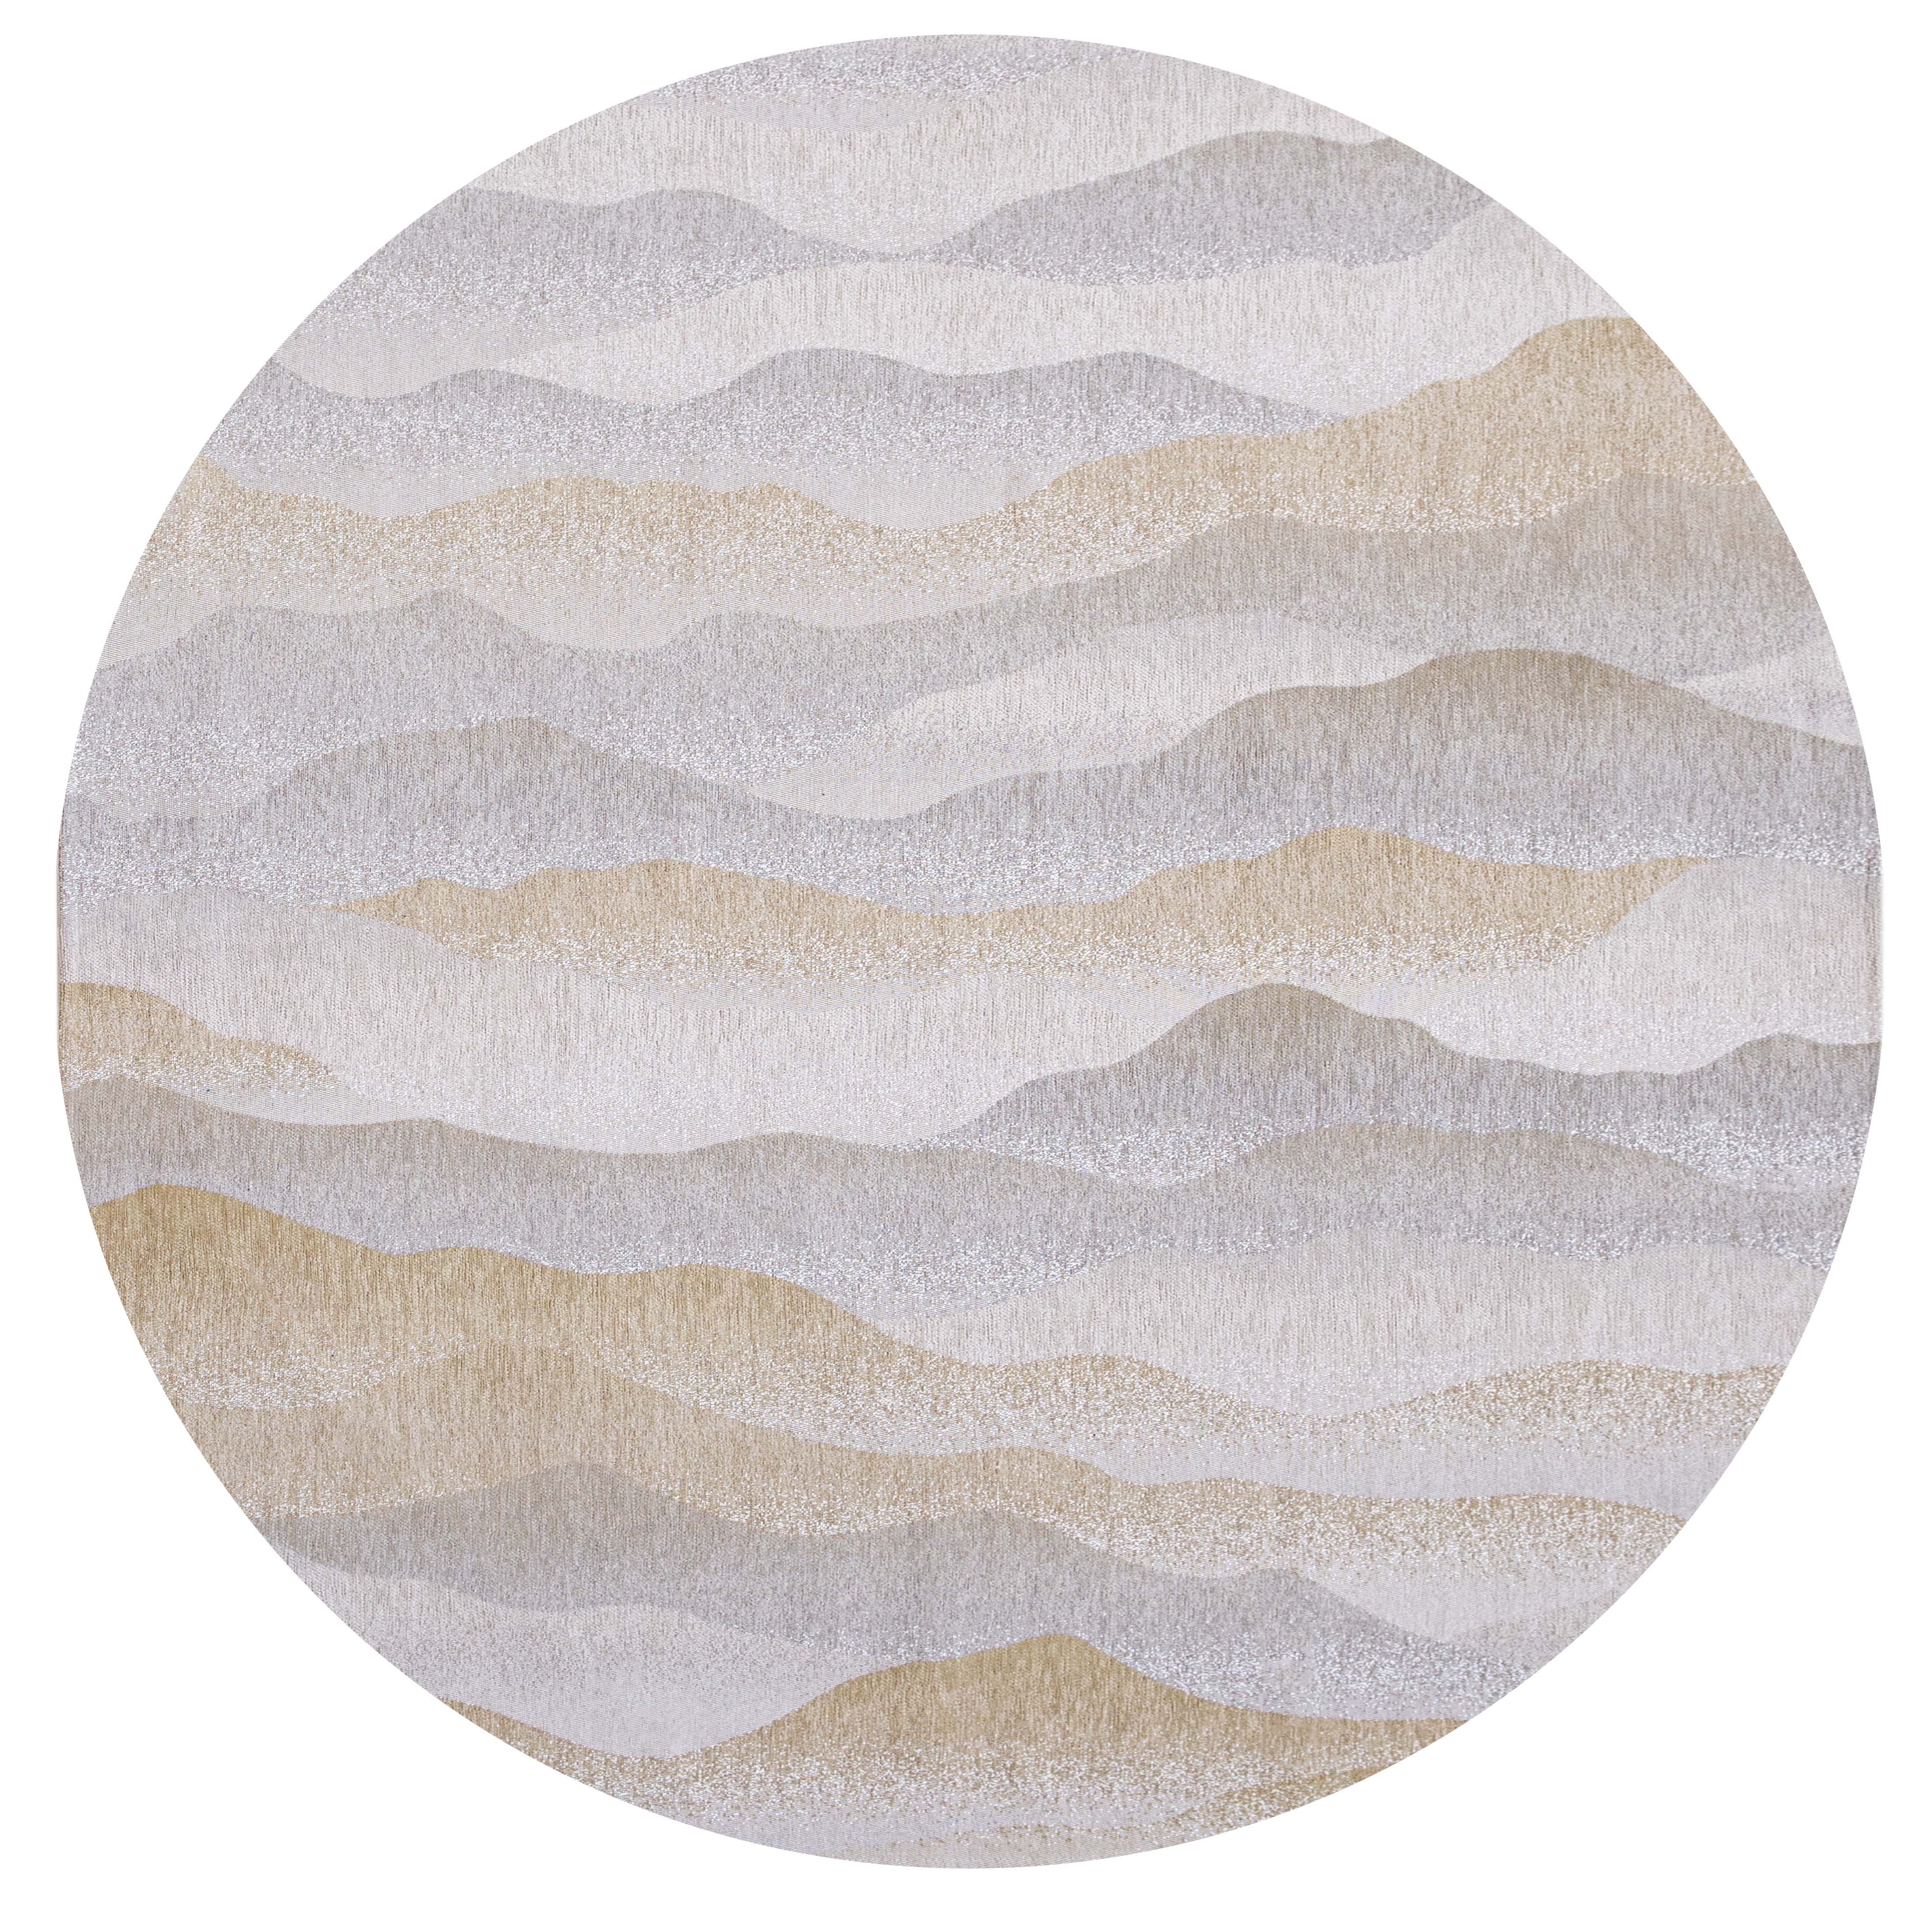 Modern circle rug with grey abstract mountain range pattern